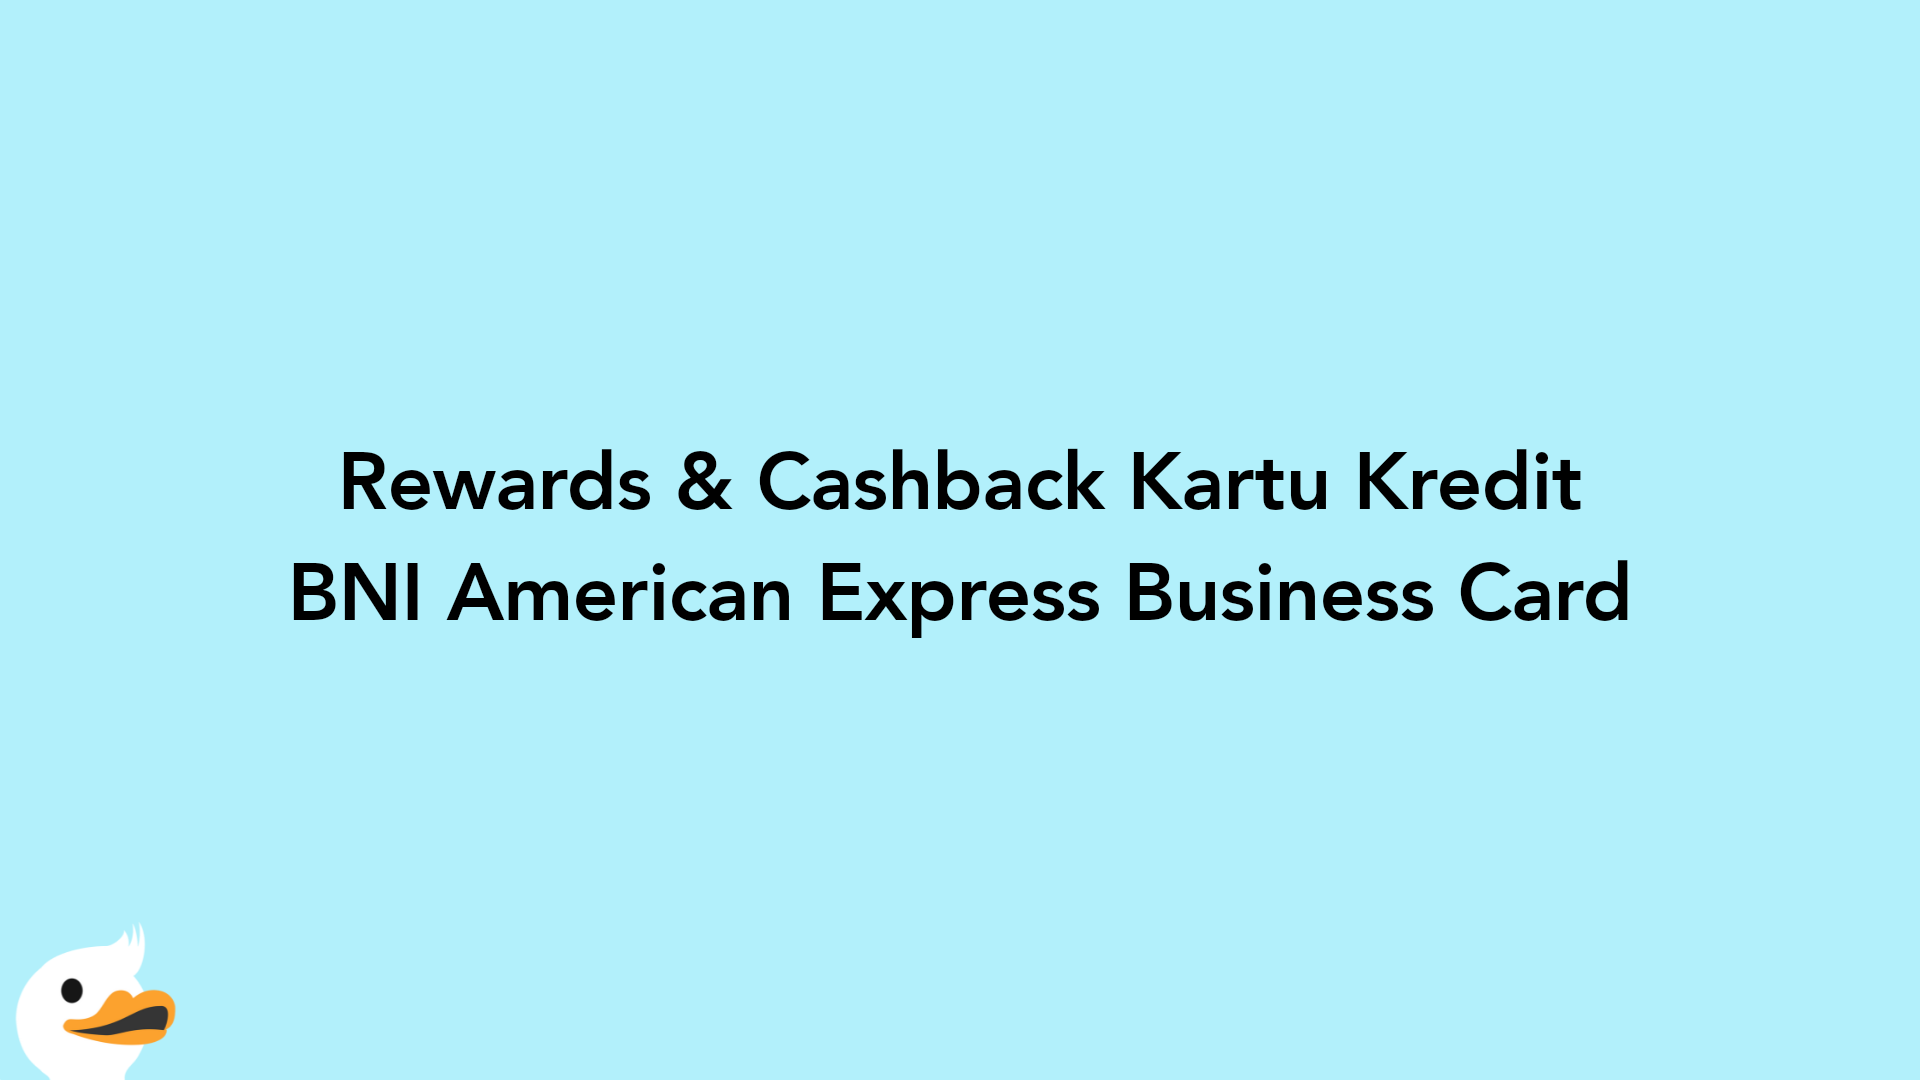 Rewards & Cashback Kartu Kredit BNI American Express Business Card